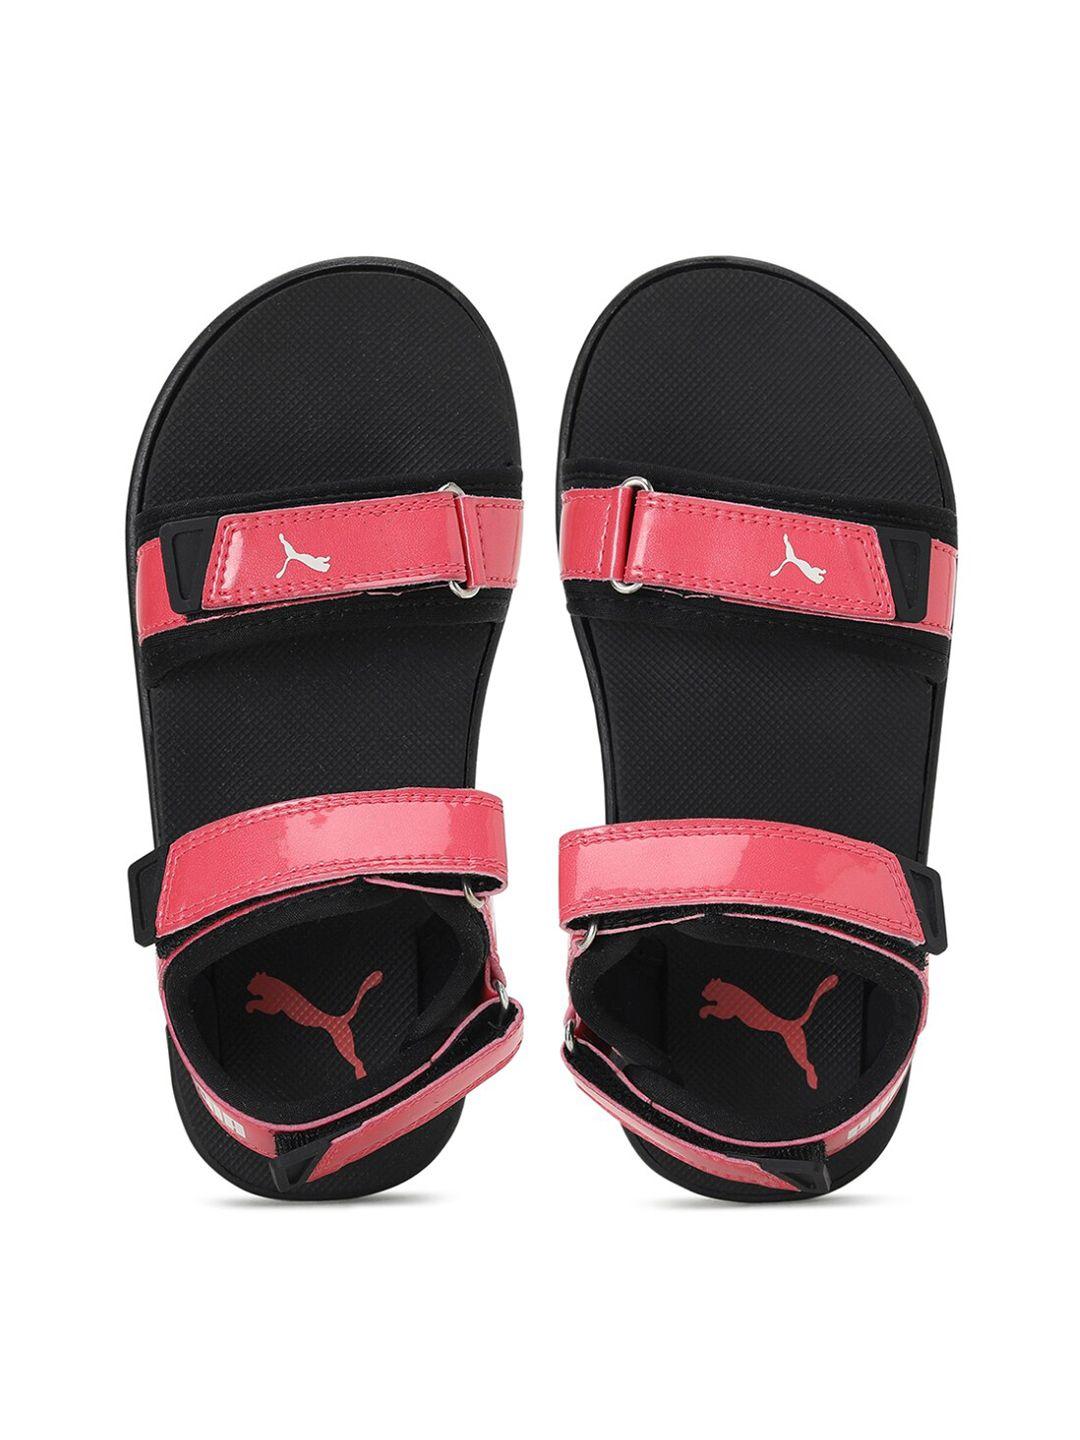 puma-women-pink-and-black-sports-sandals